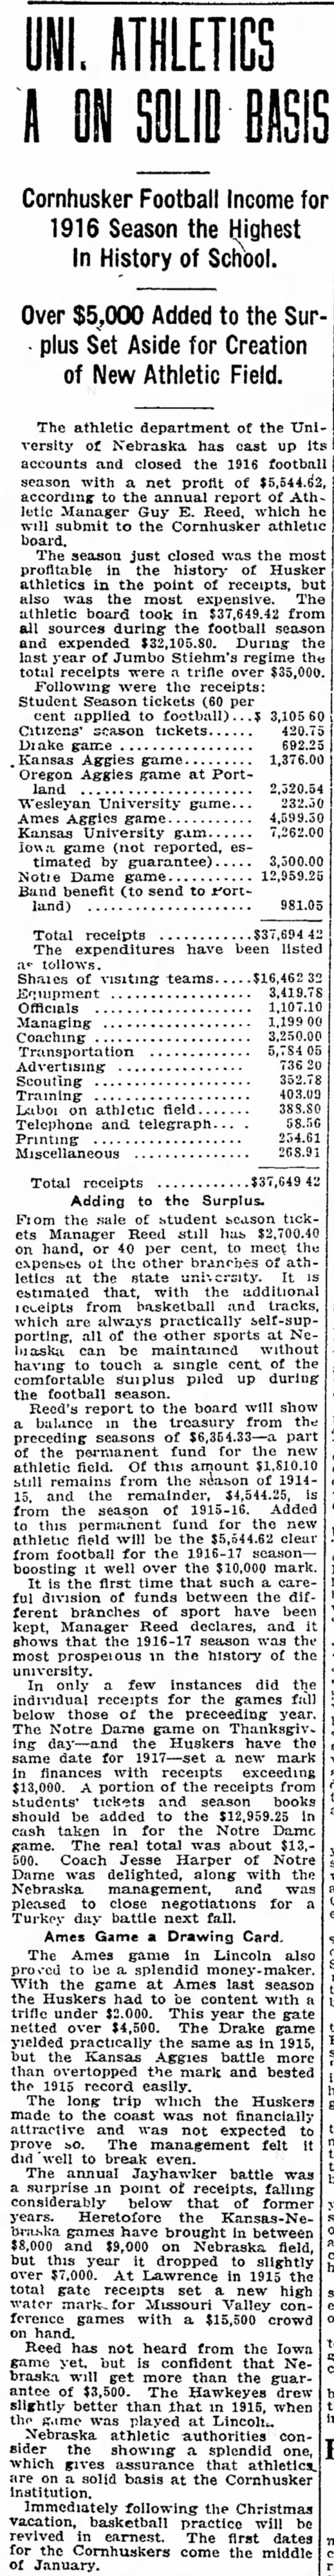 1916 Nebraska football finances - 